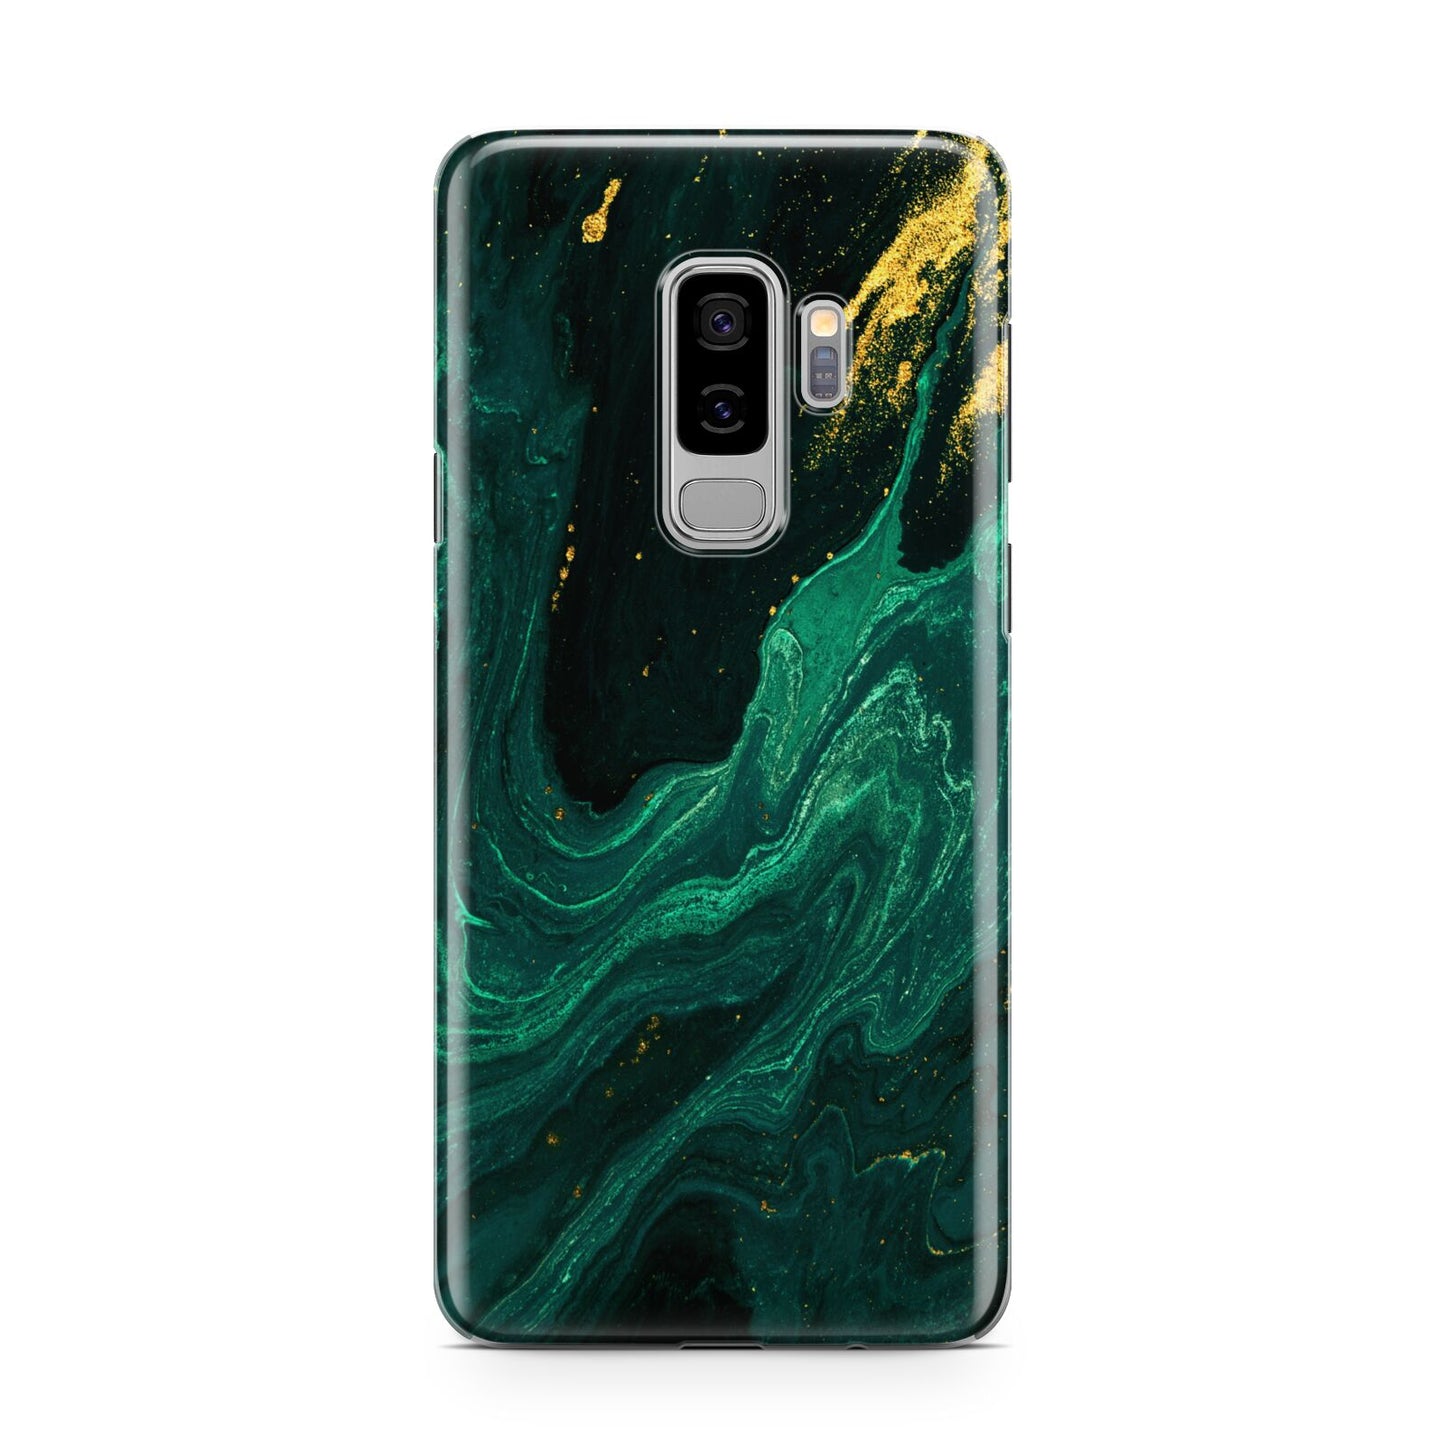 Emerald Green Samsung Galaxy S9 Plus Case on Silver phone